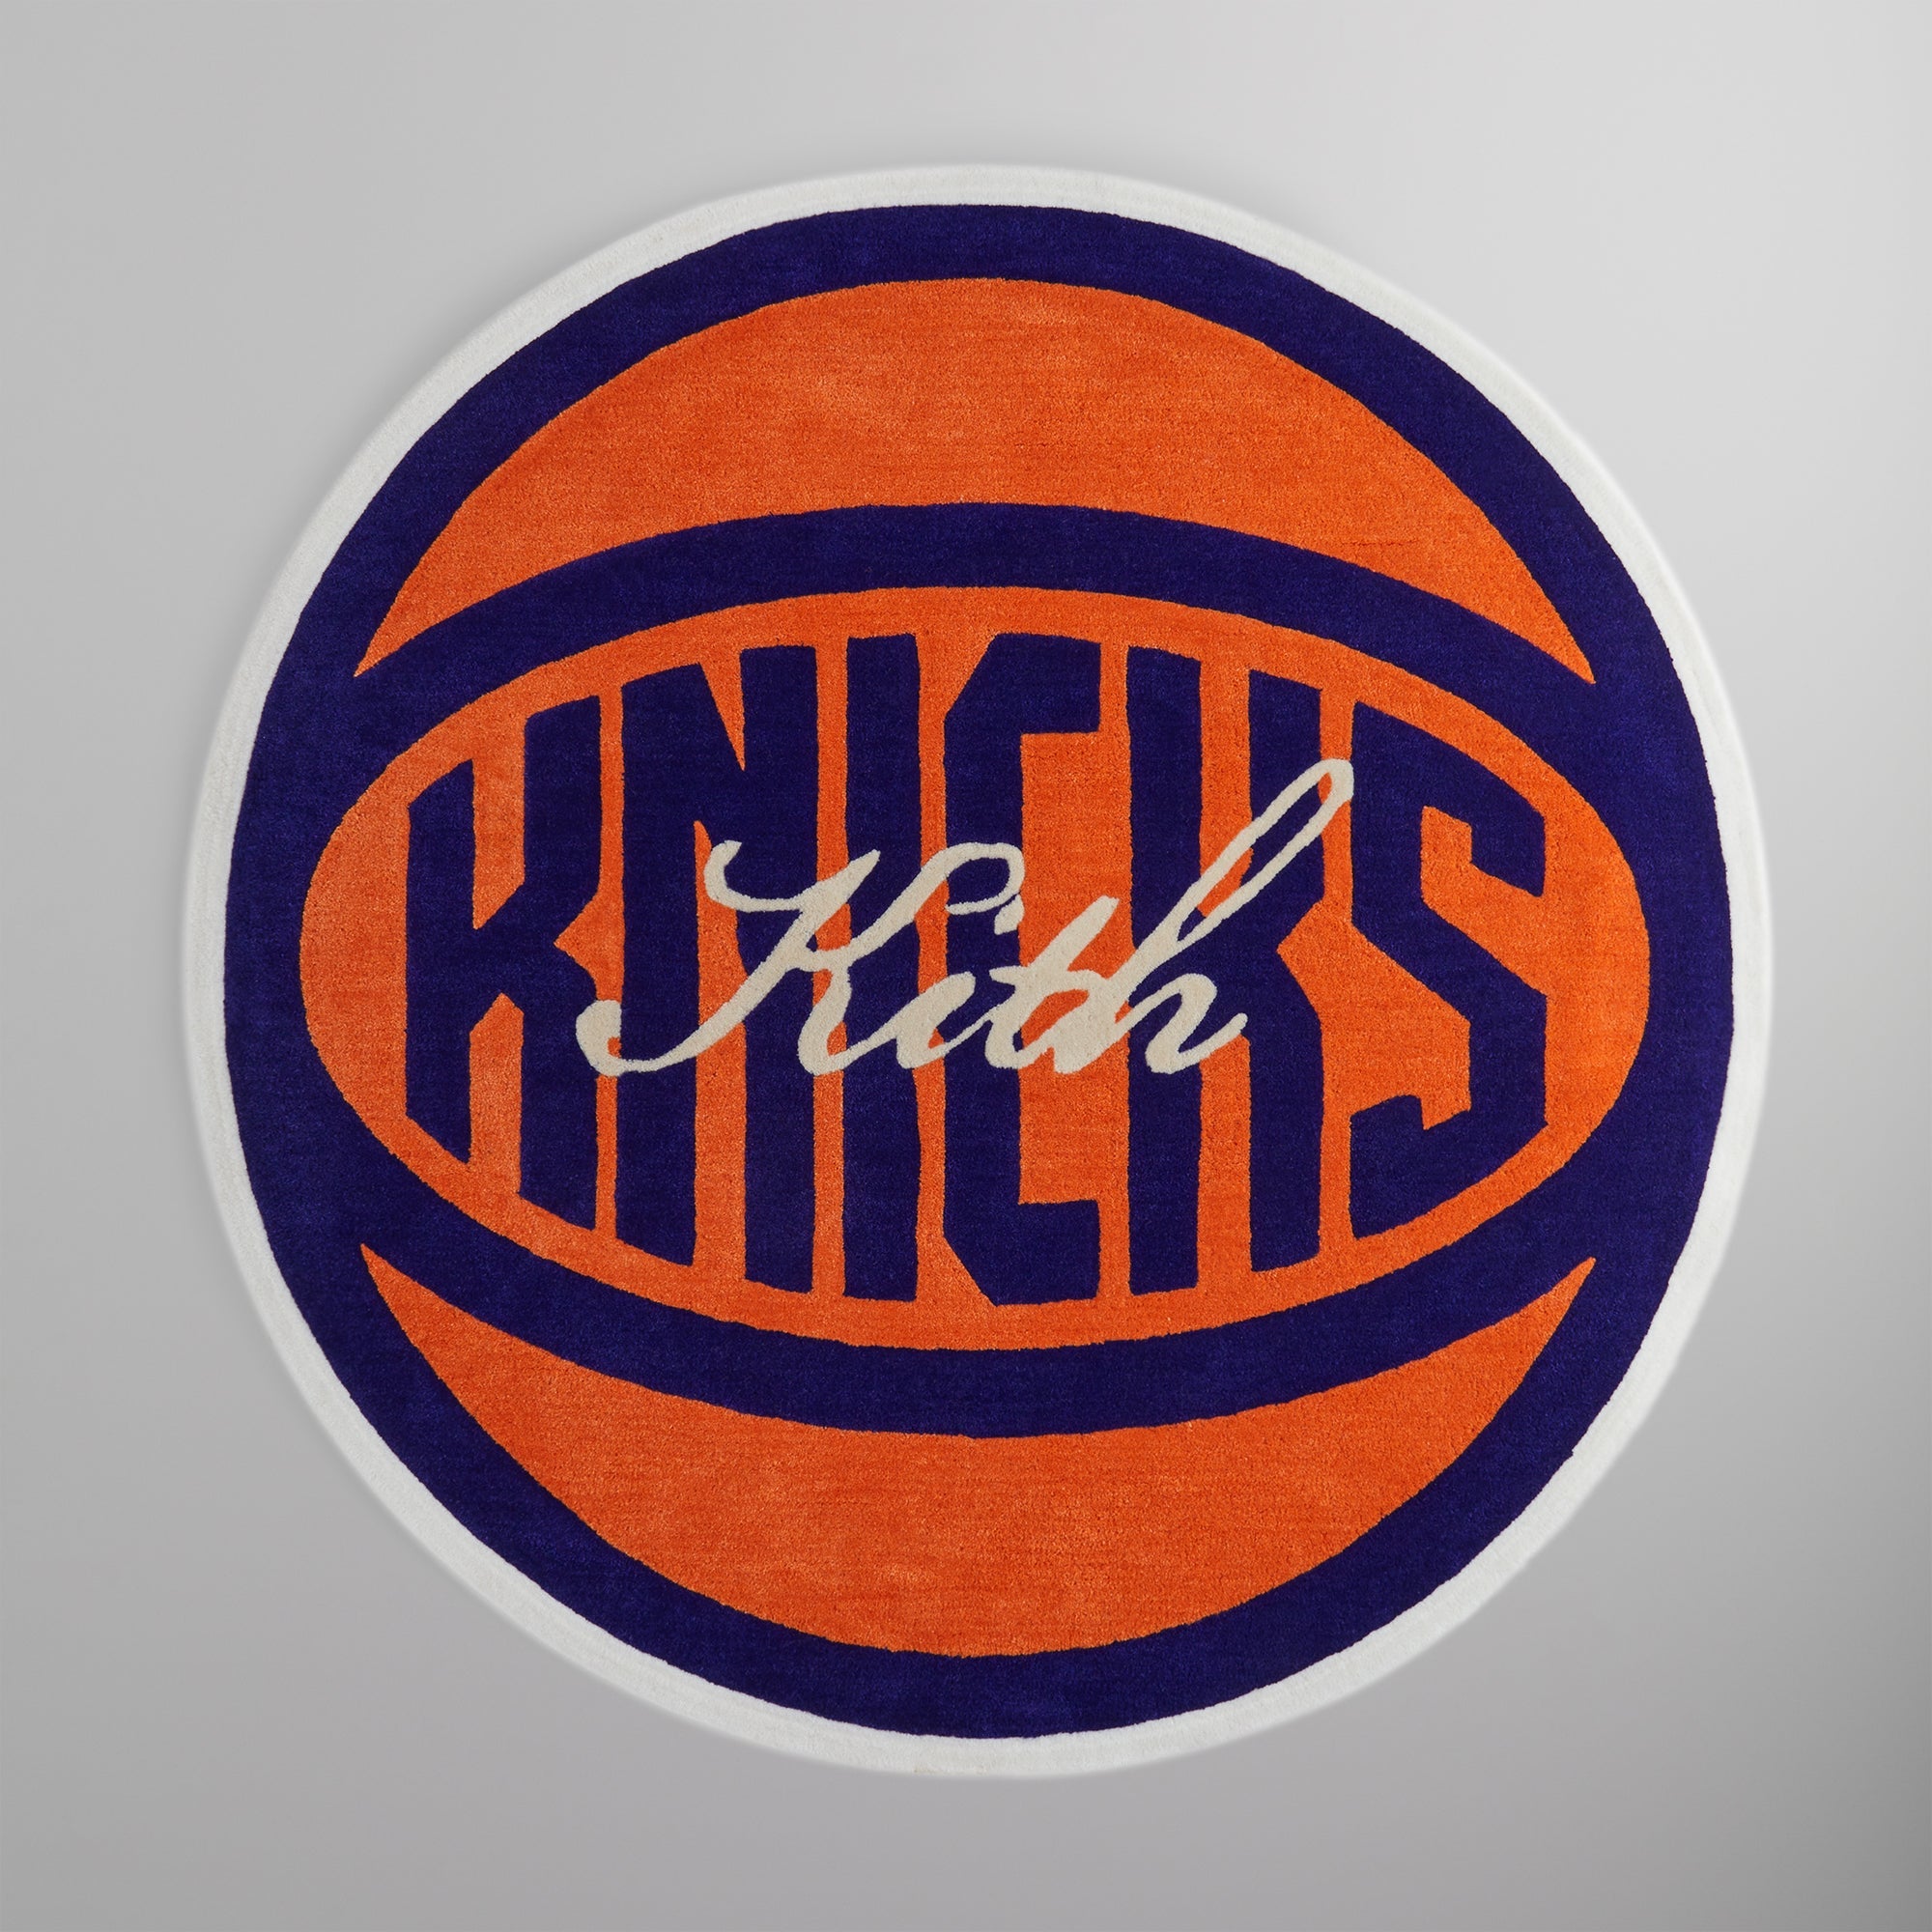 Kith for the New York Knicks Rondel Rug - Volume – Kith Europe